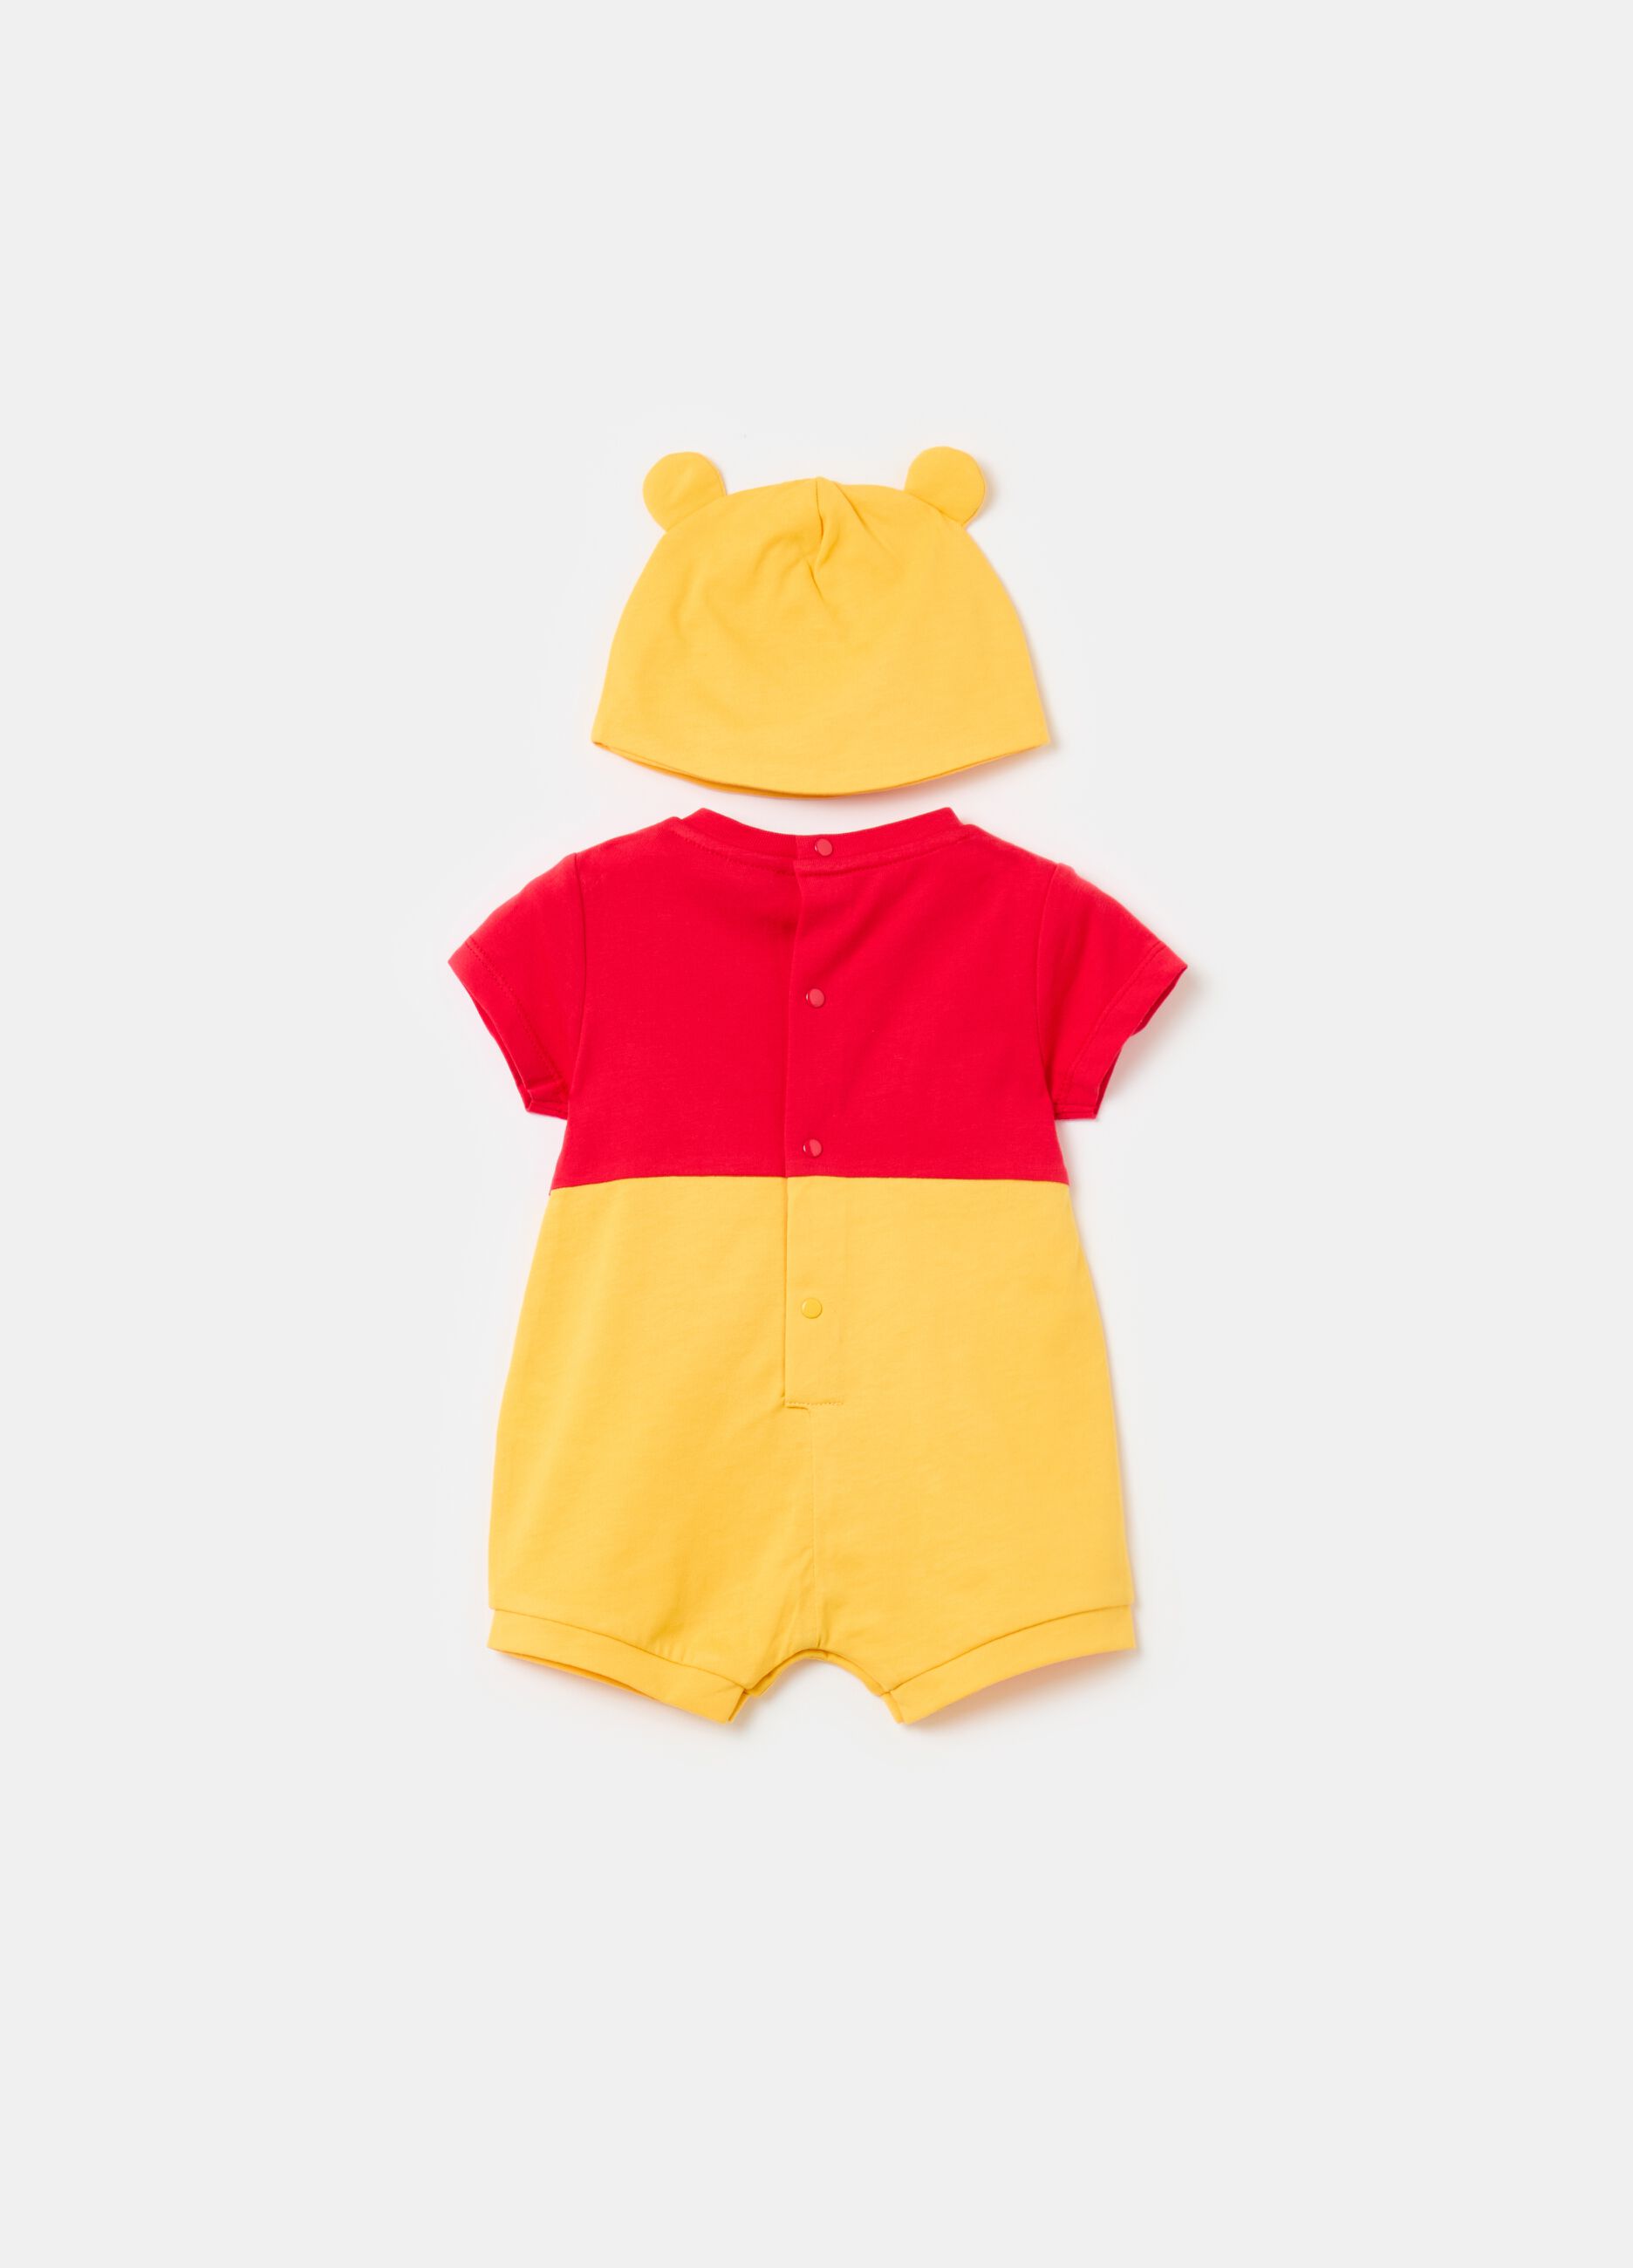 Winnie the Pooh romper suit and cap set